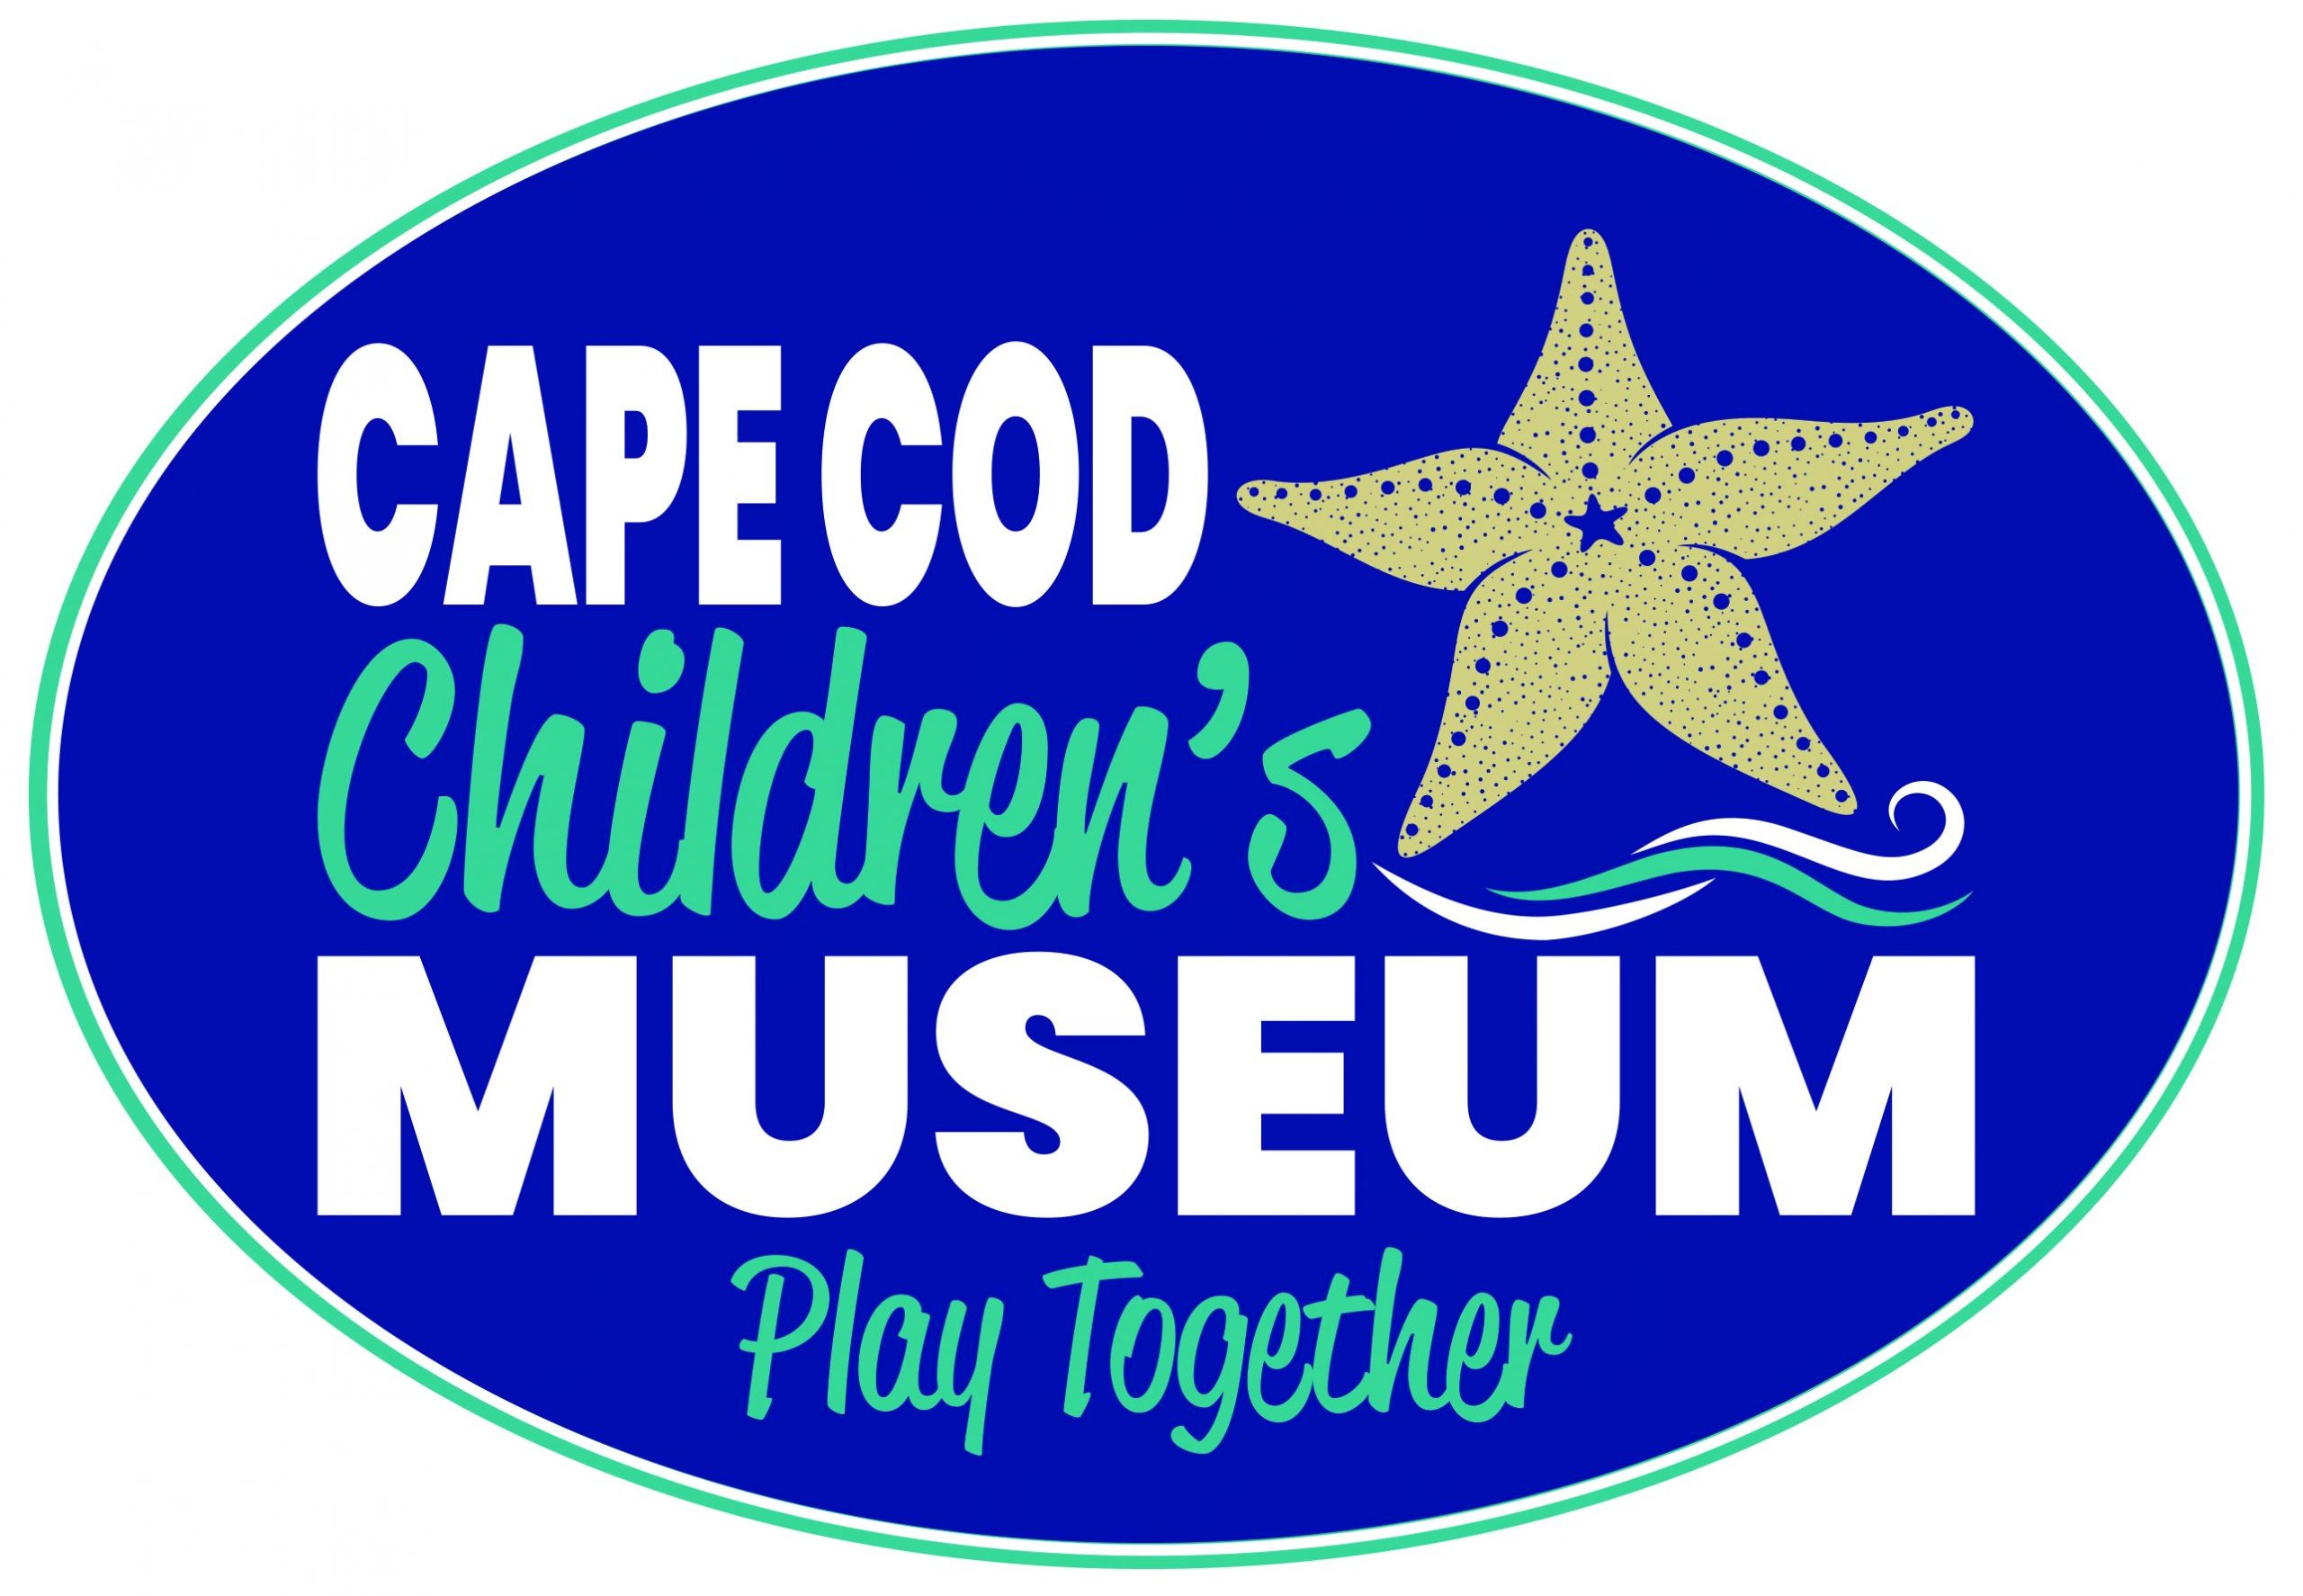 Cape Cod Children's Museum